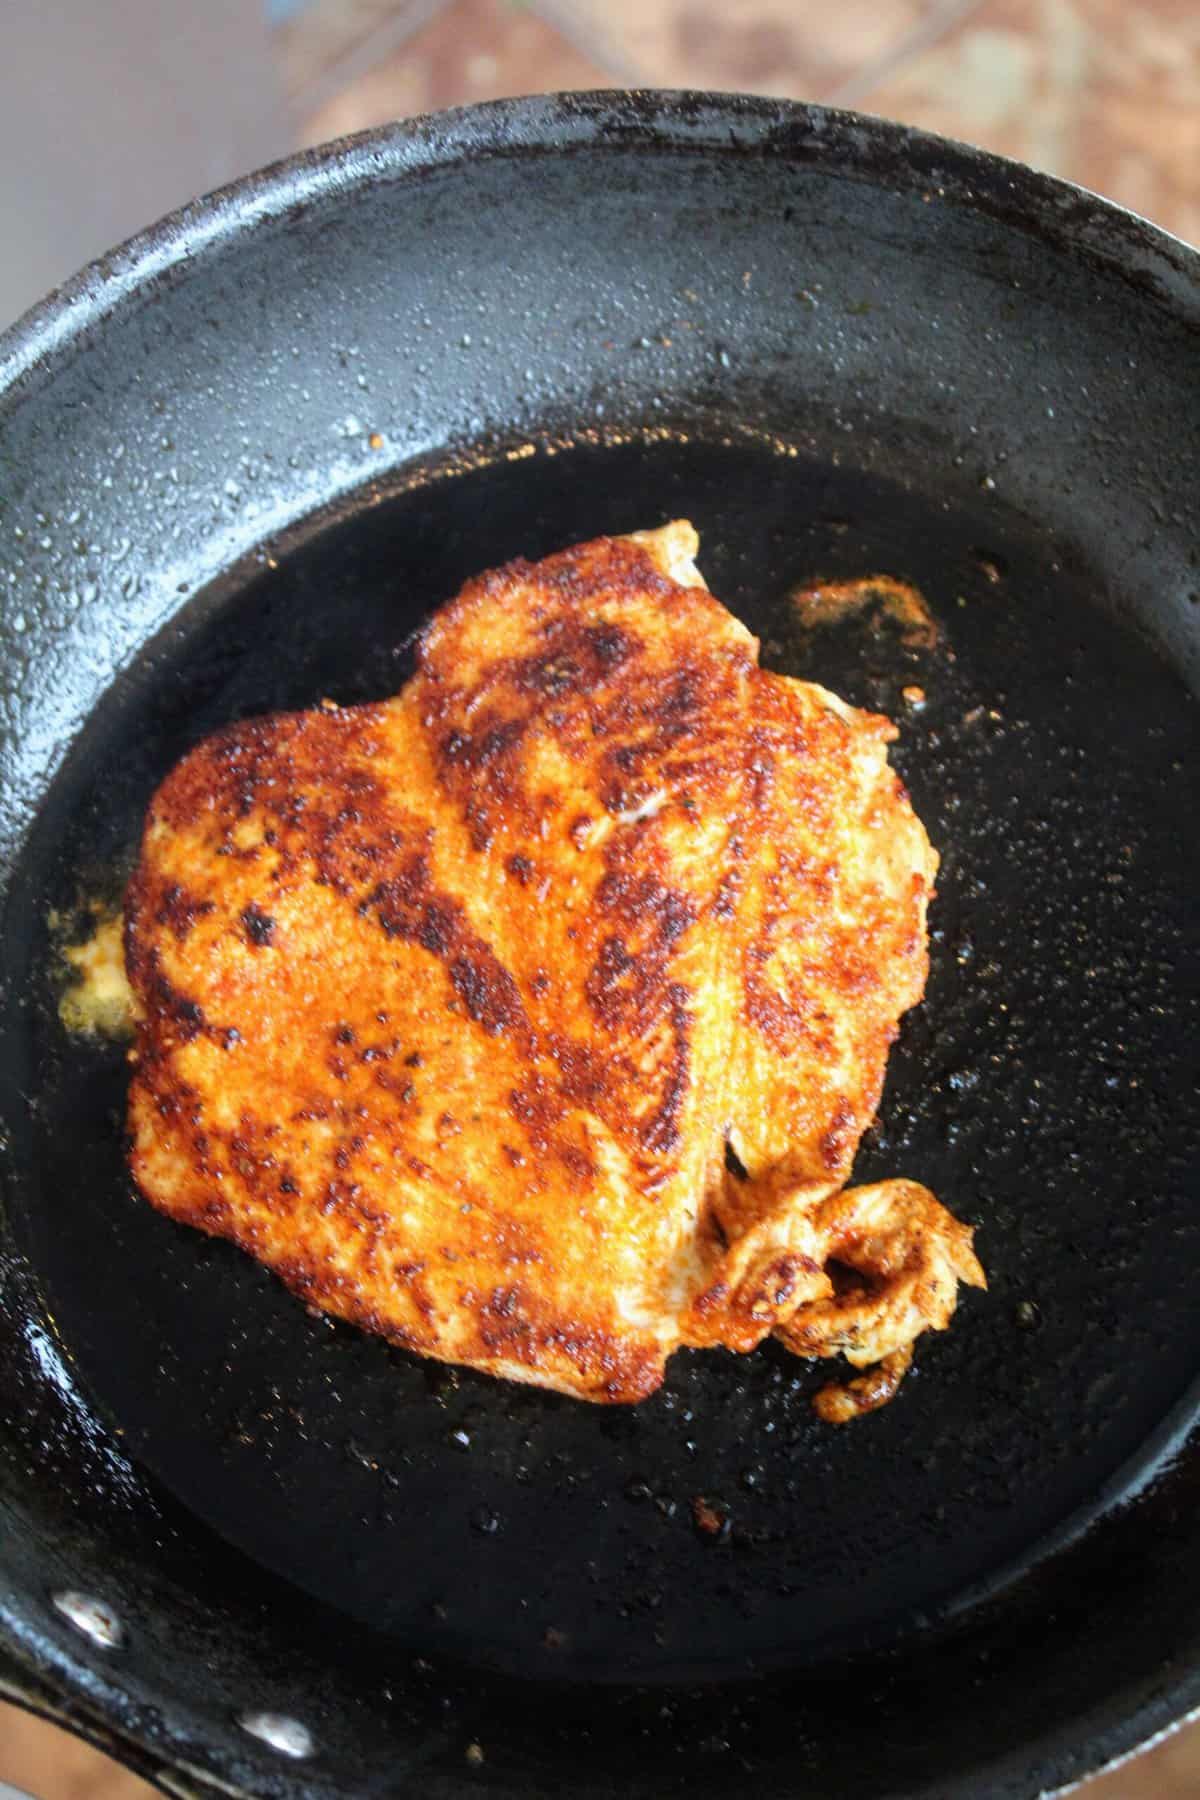 Blackened chicken in saucepan